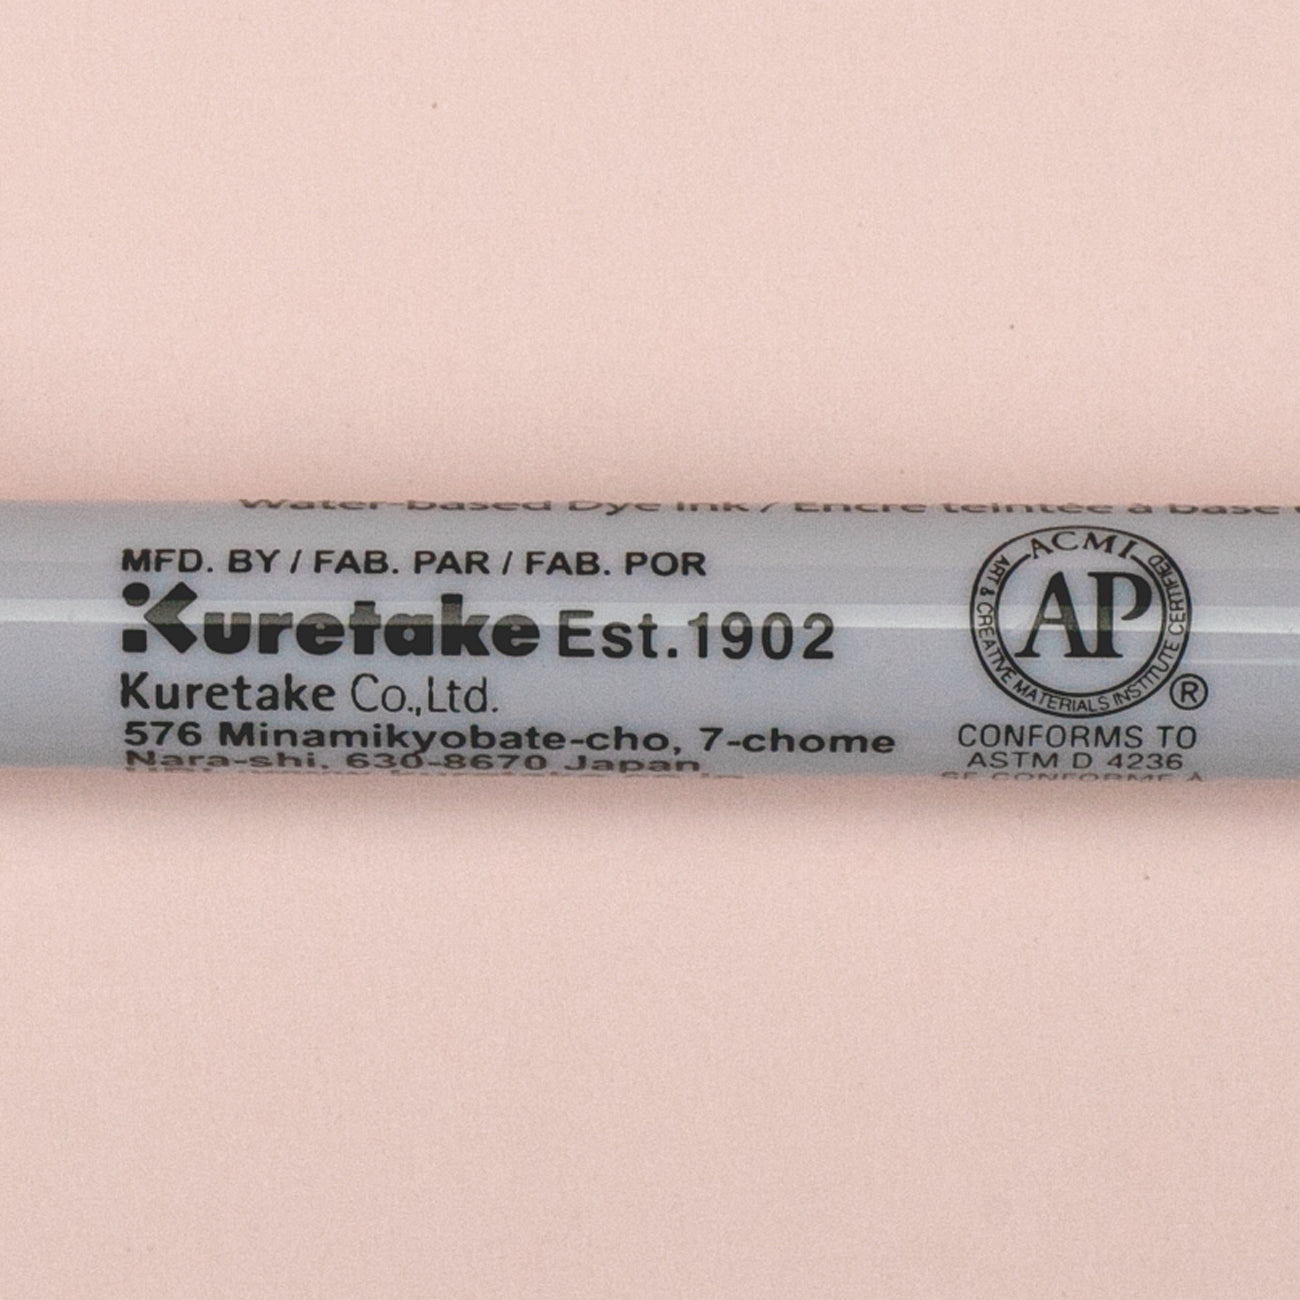 Kuretake ZIG Clean Color FB Felt Tip Brush Pen - Medium Beige - 076